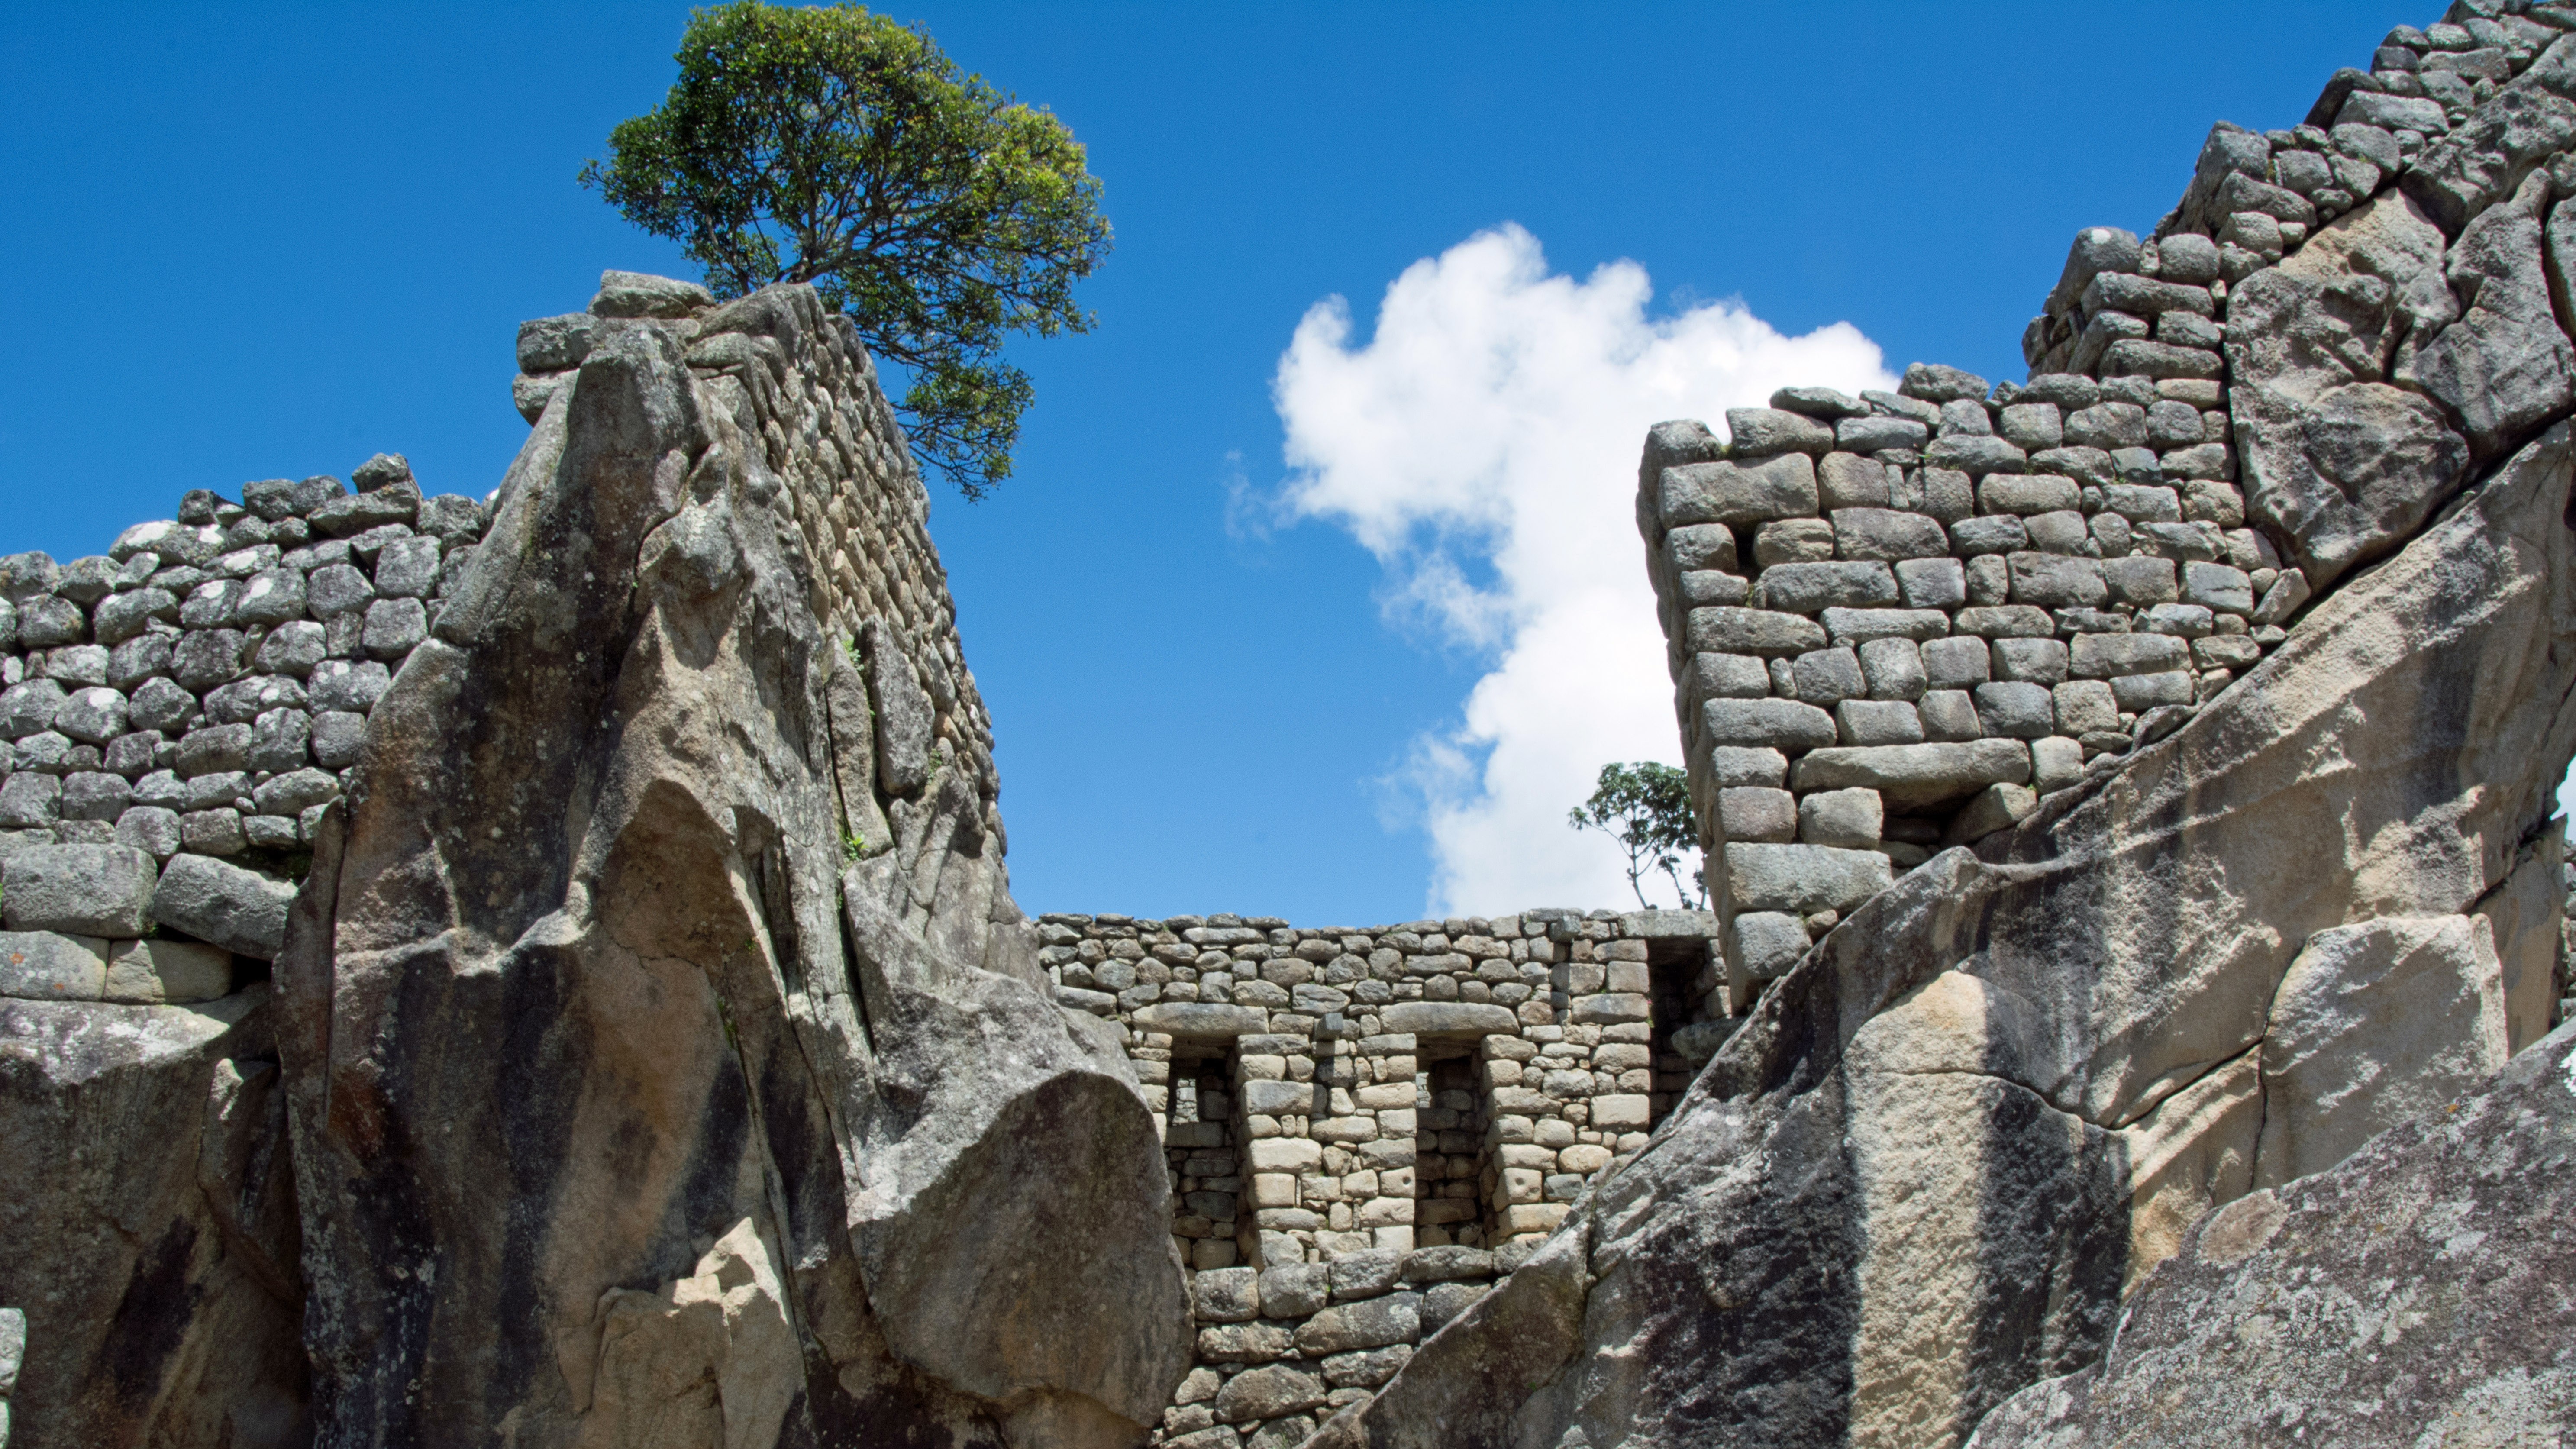 General 5950x3347 Machu Picchu stones Inca World Heritage Site South America Peru ruins ancient history